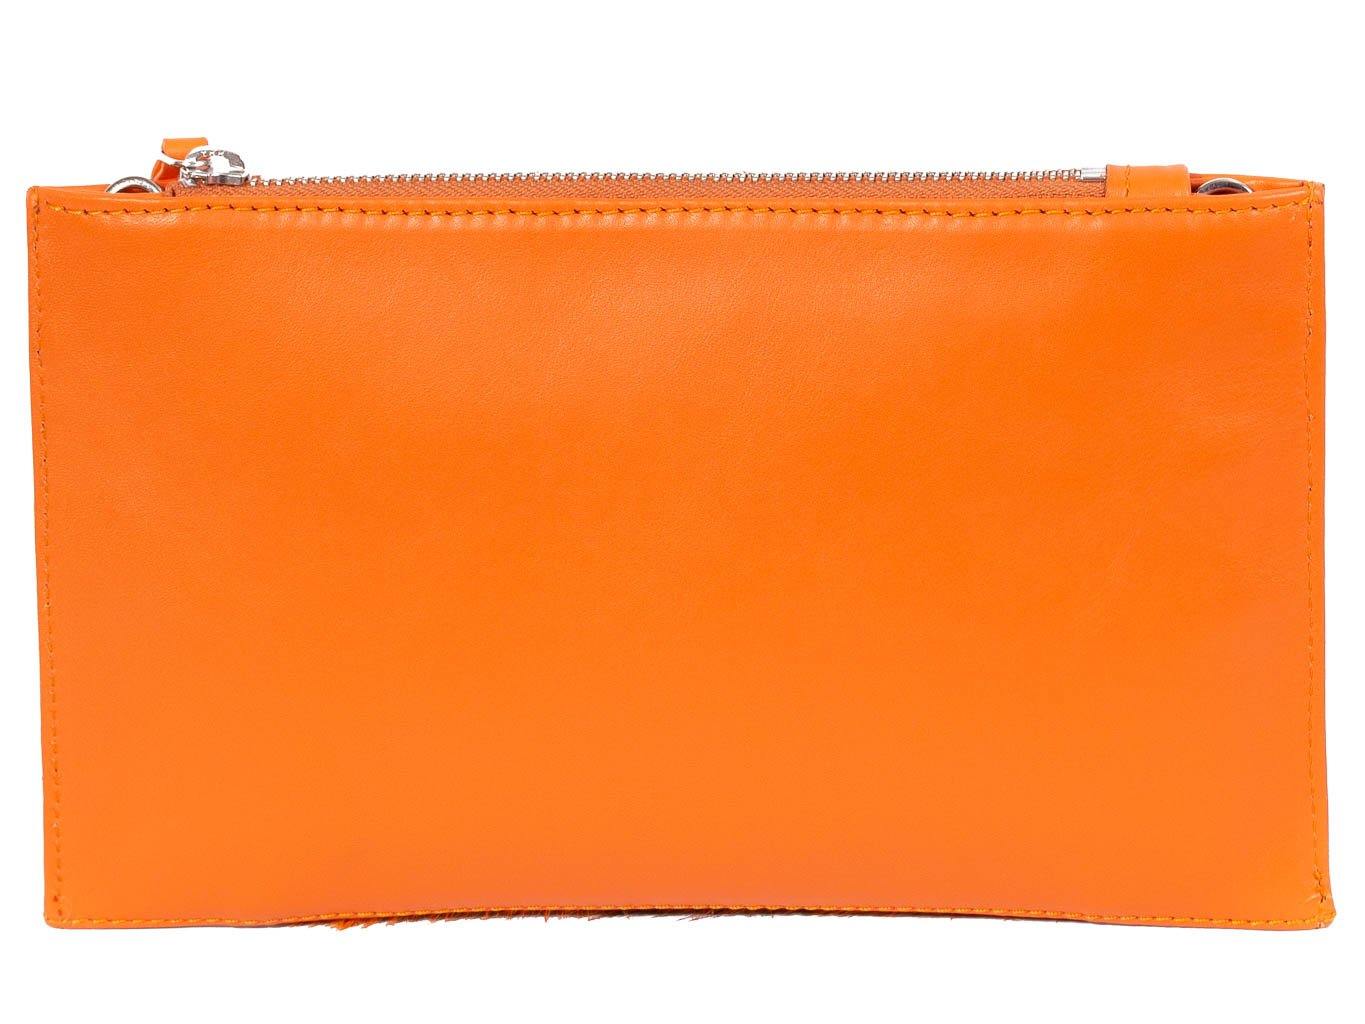 Clutch Springbok Handbag in Orange with a fan feature by Sherene Melinda  back